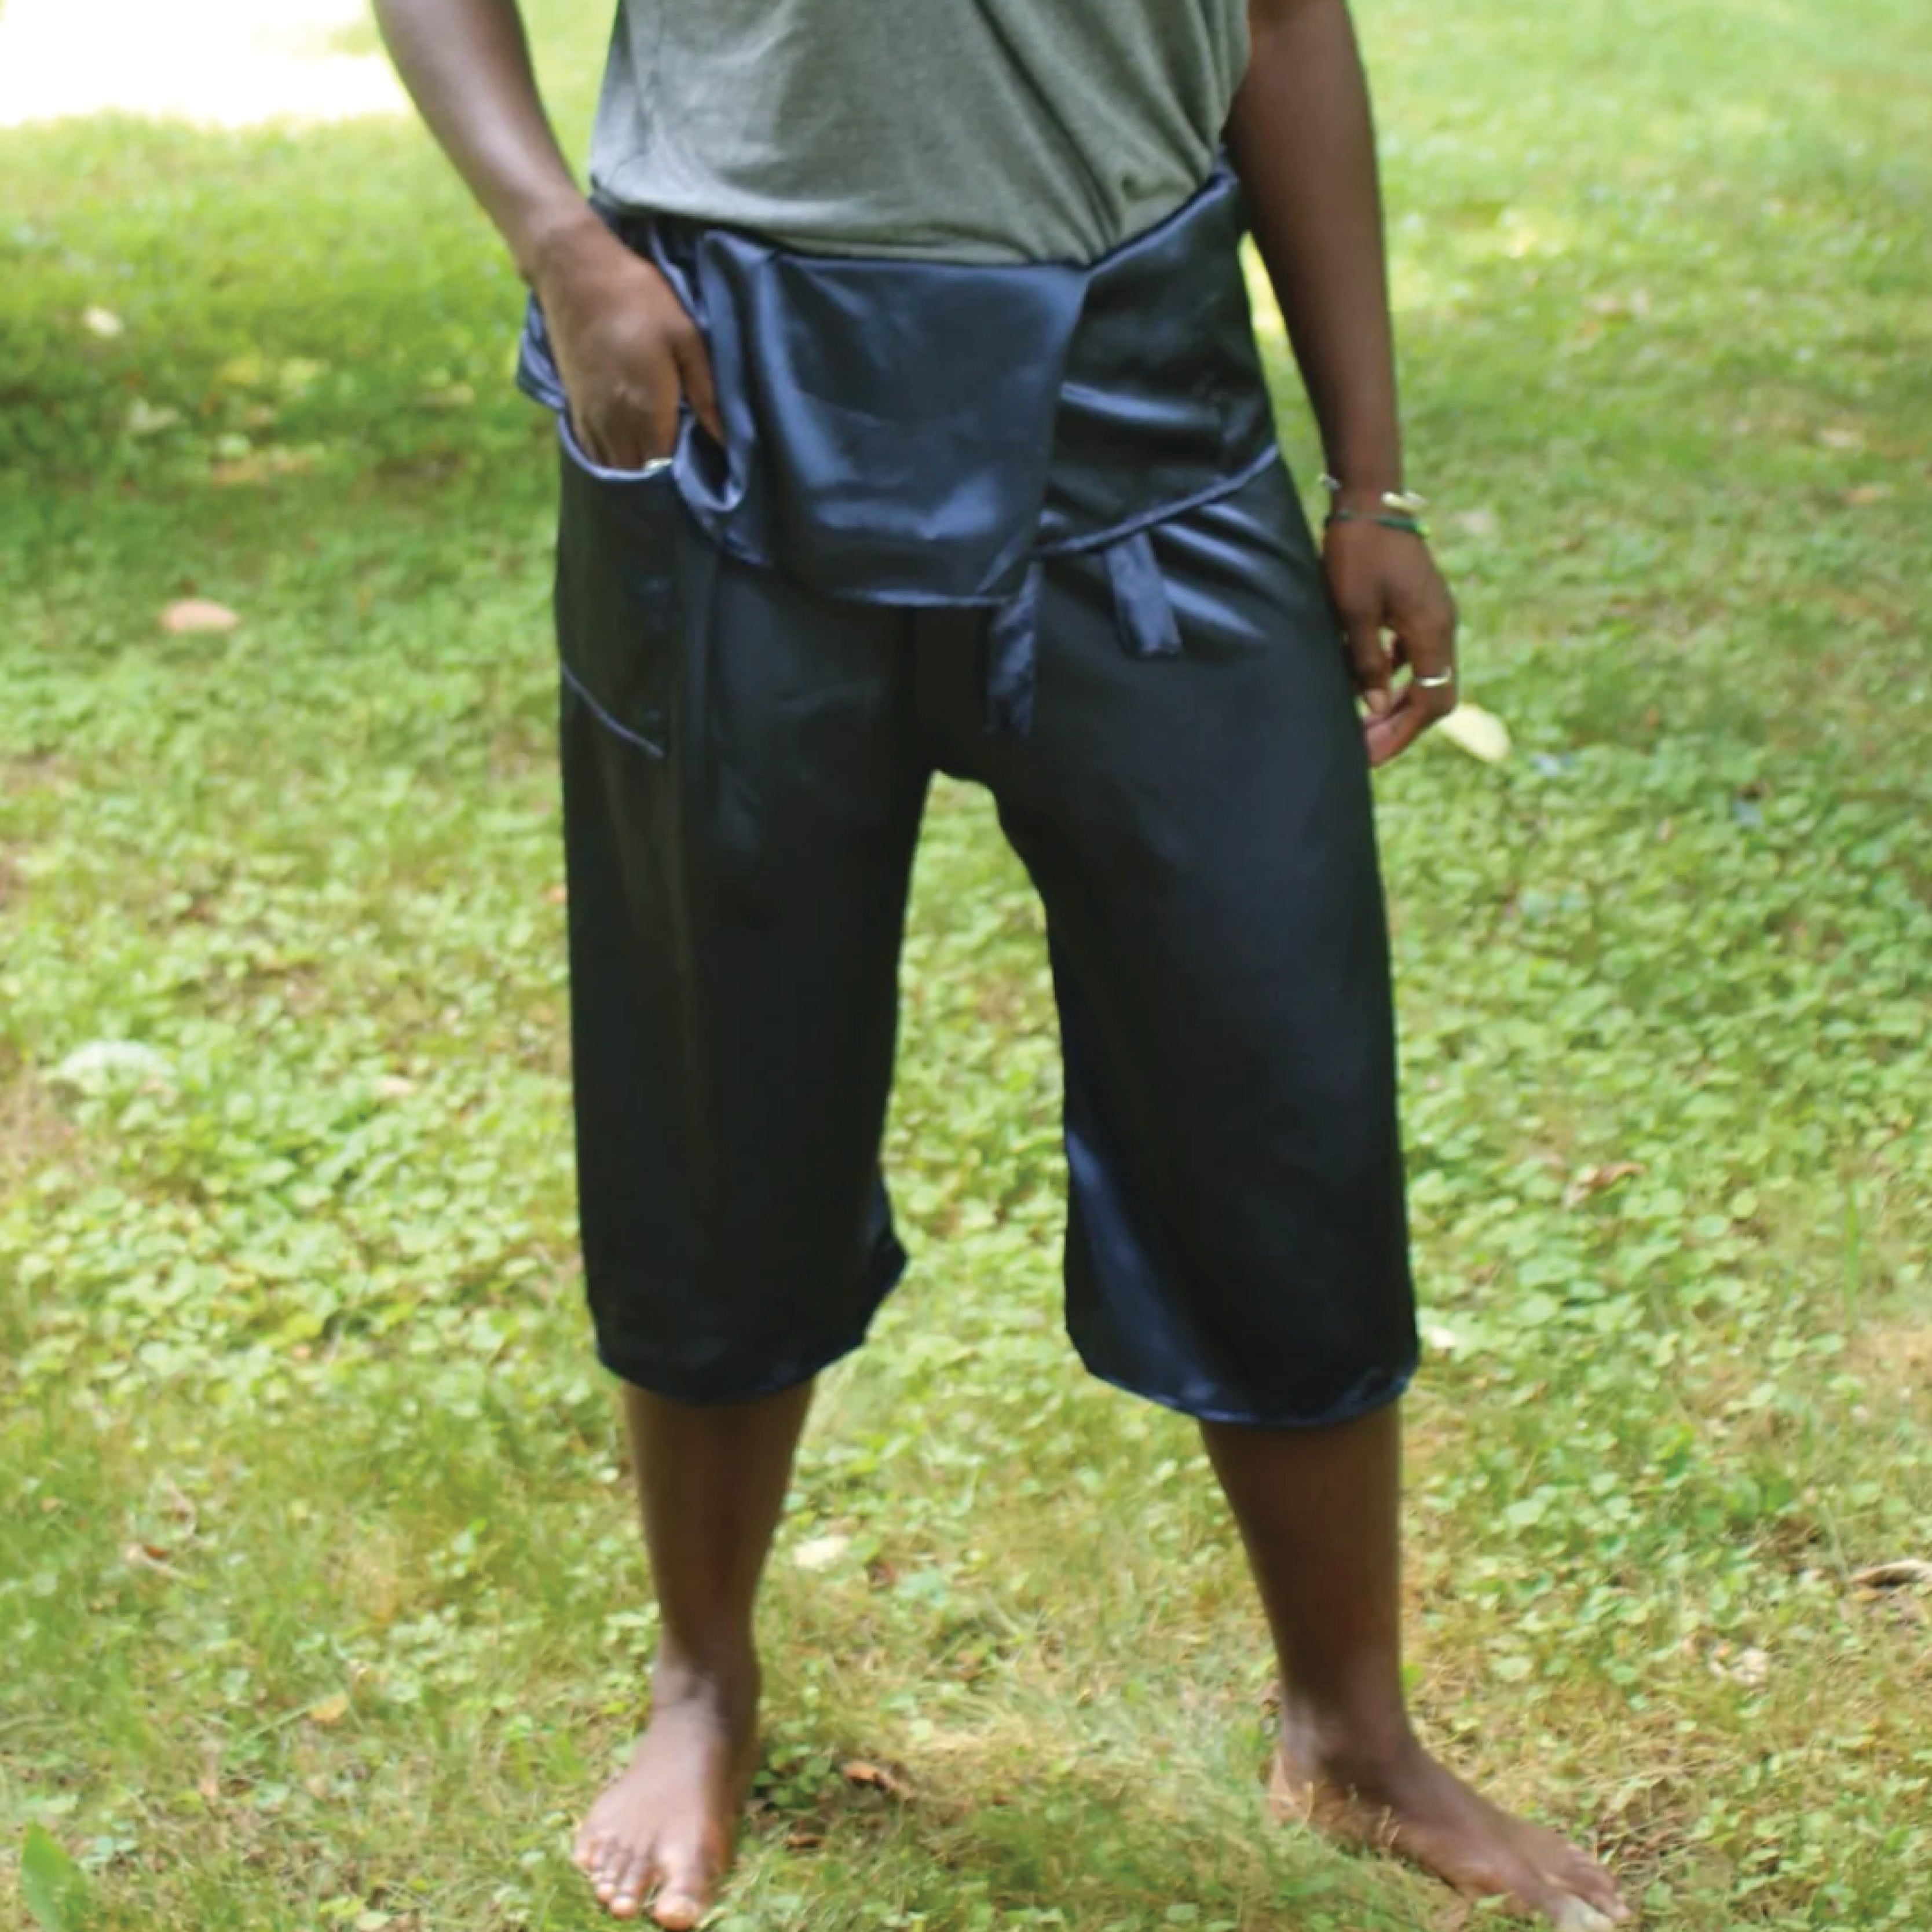 Fisherman Pants Linen Wrap Pants Mens Line Yoga Trousers Loose